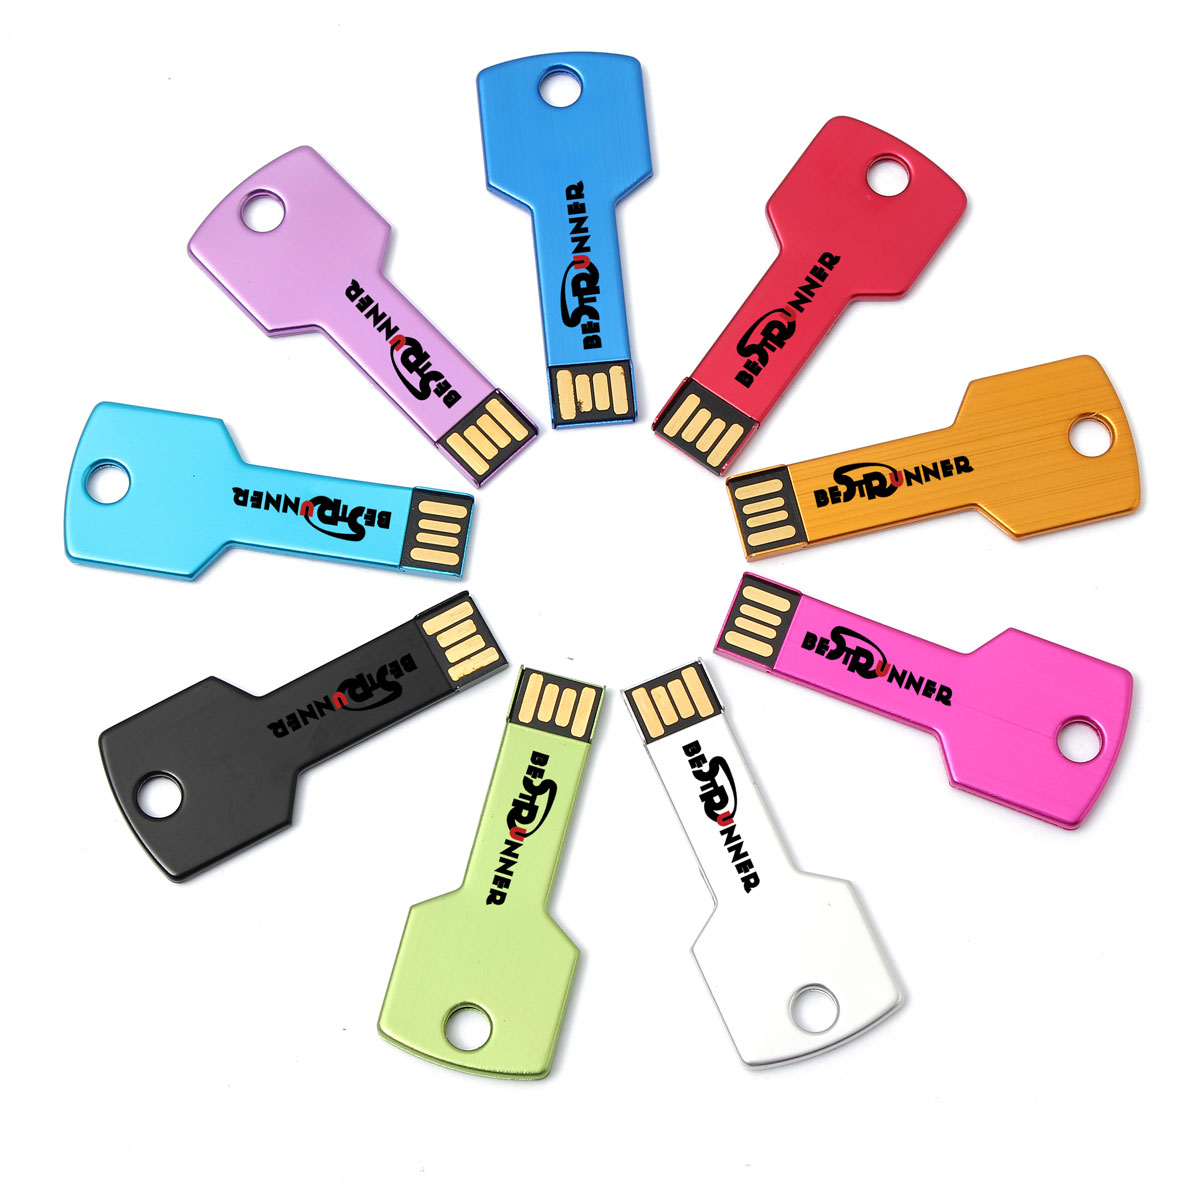 Bestrunner 16GB Multicolor Metal Key USB Flash Drive